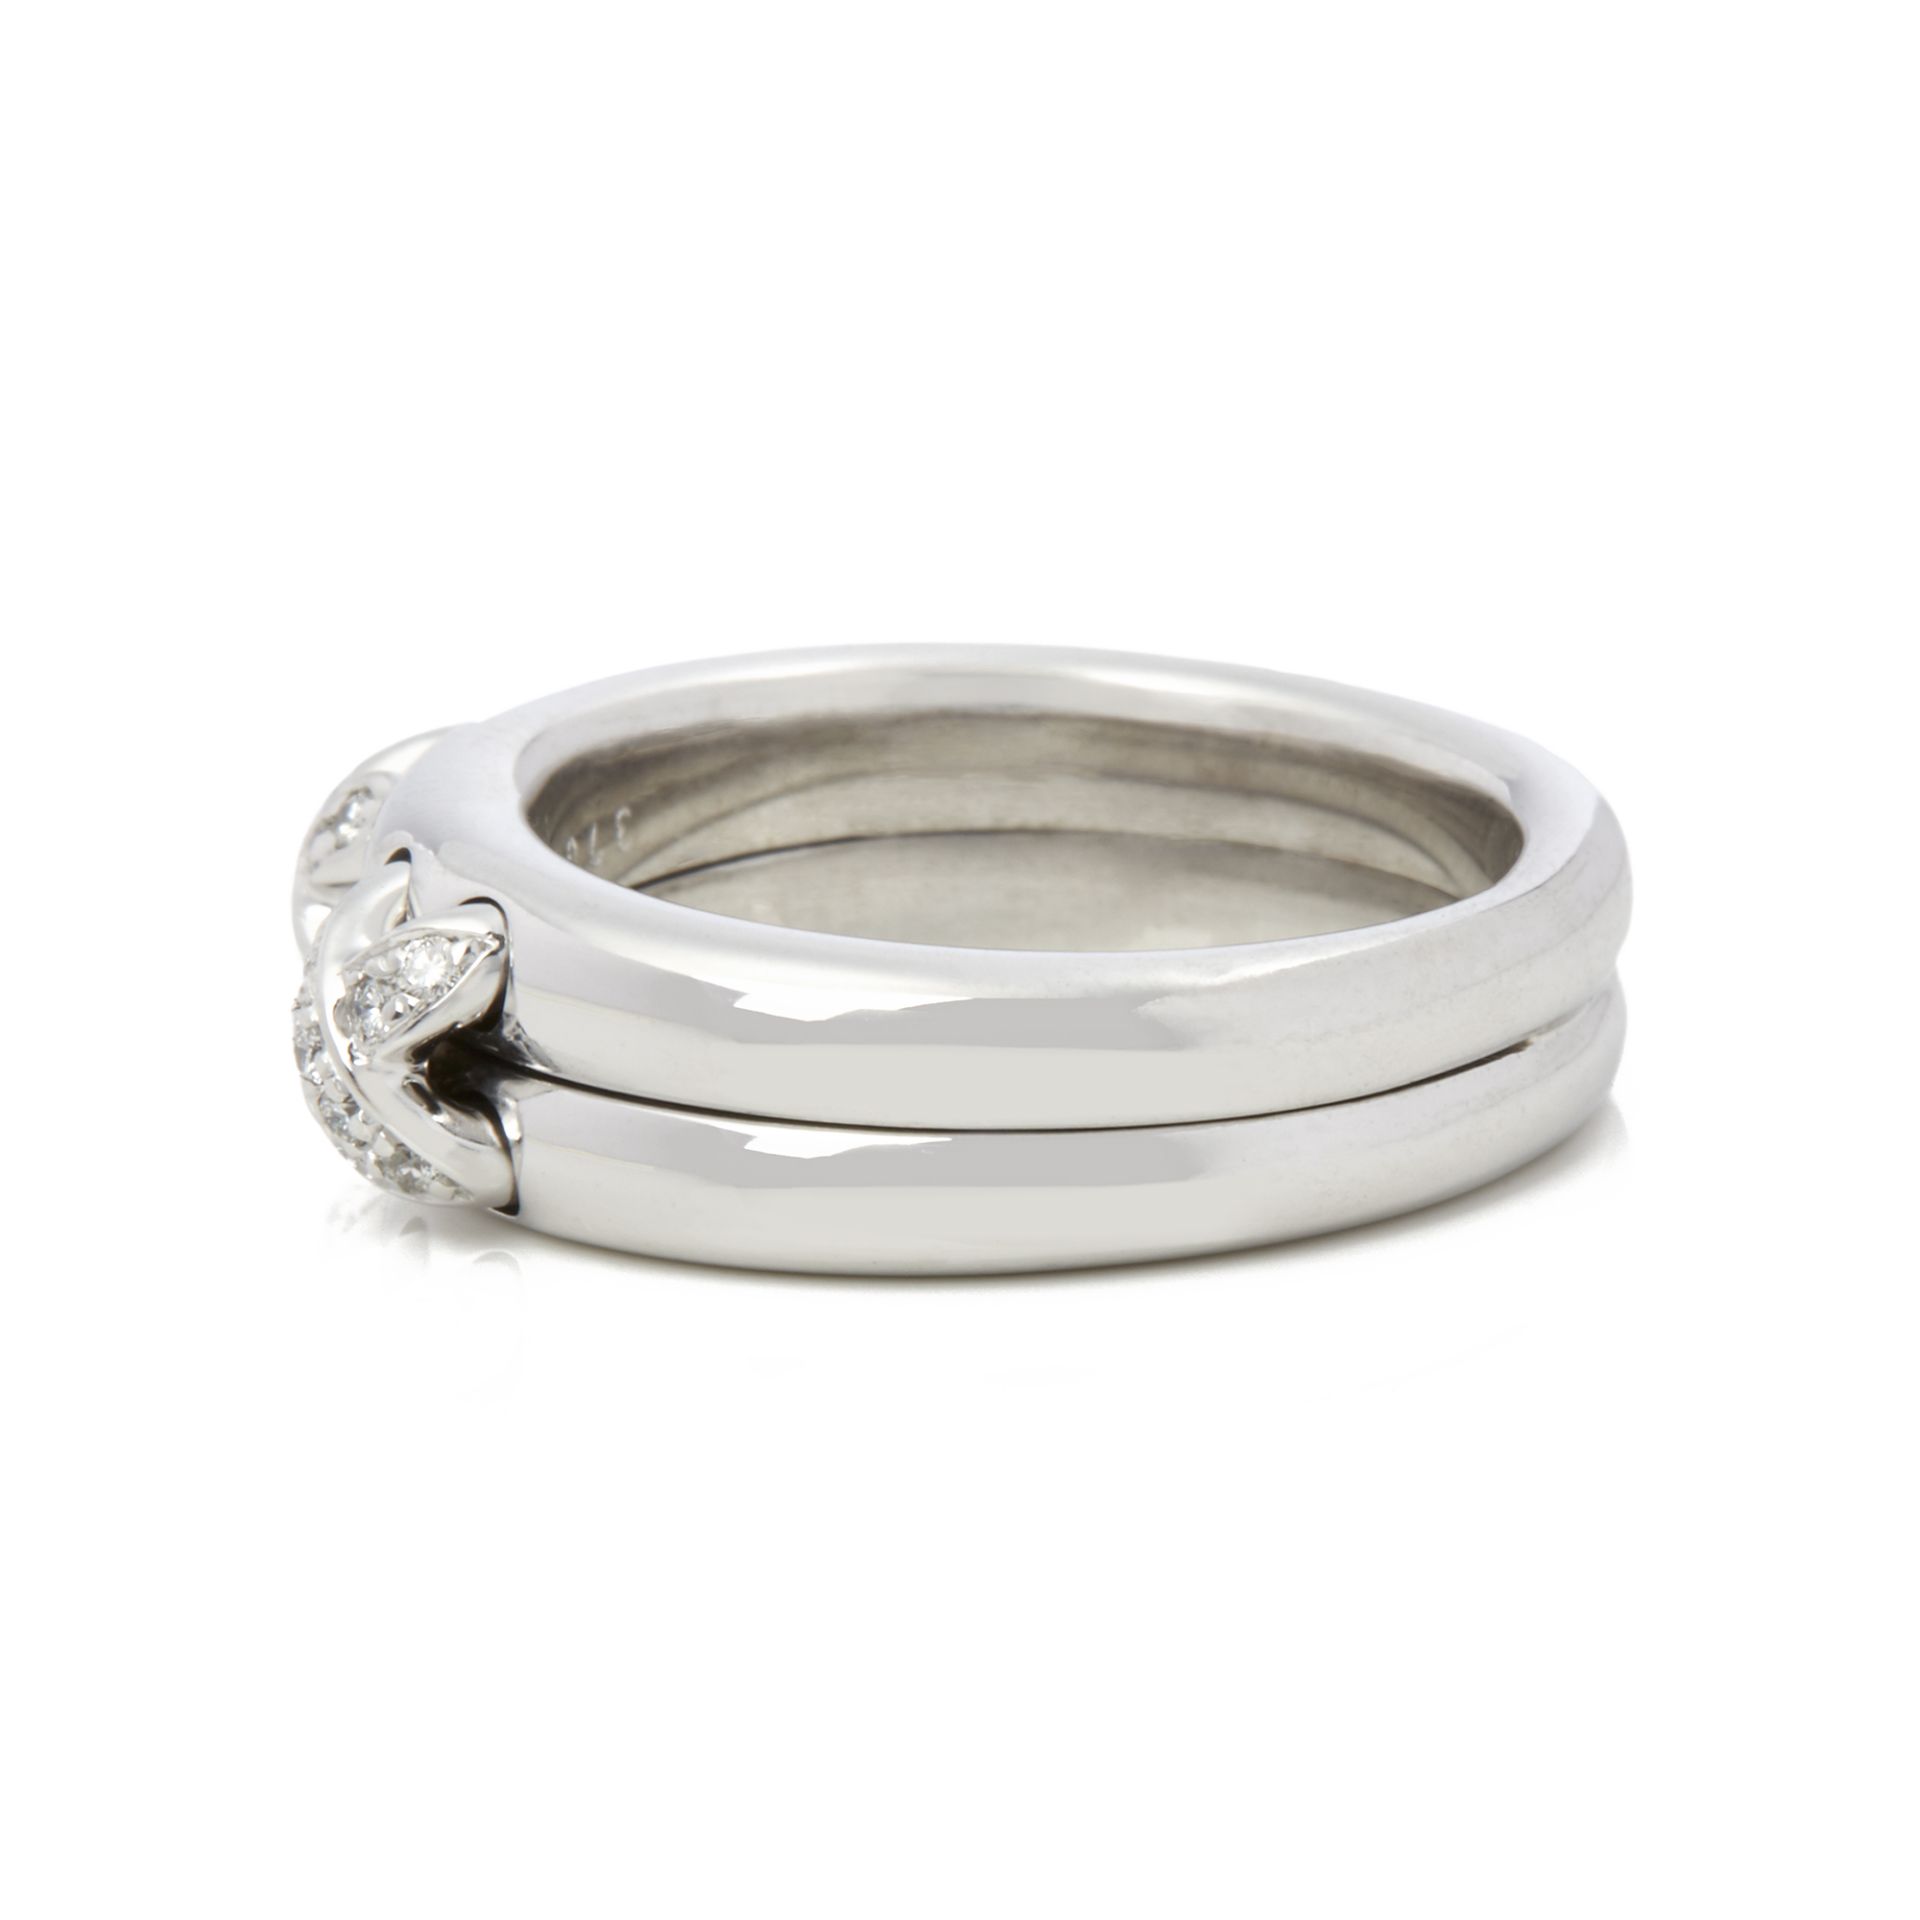 Chaumet 18k White Gold Diamond Liens Ring - Image 2 of 6